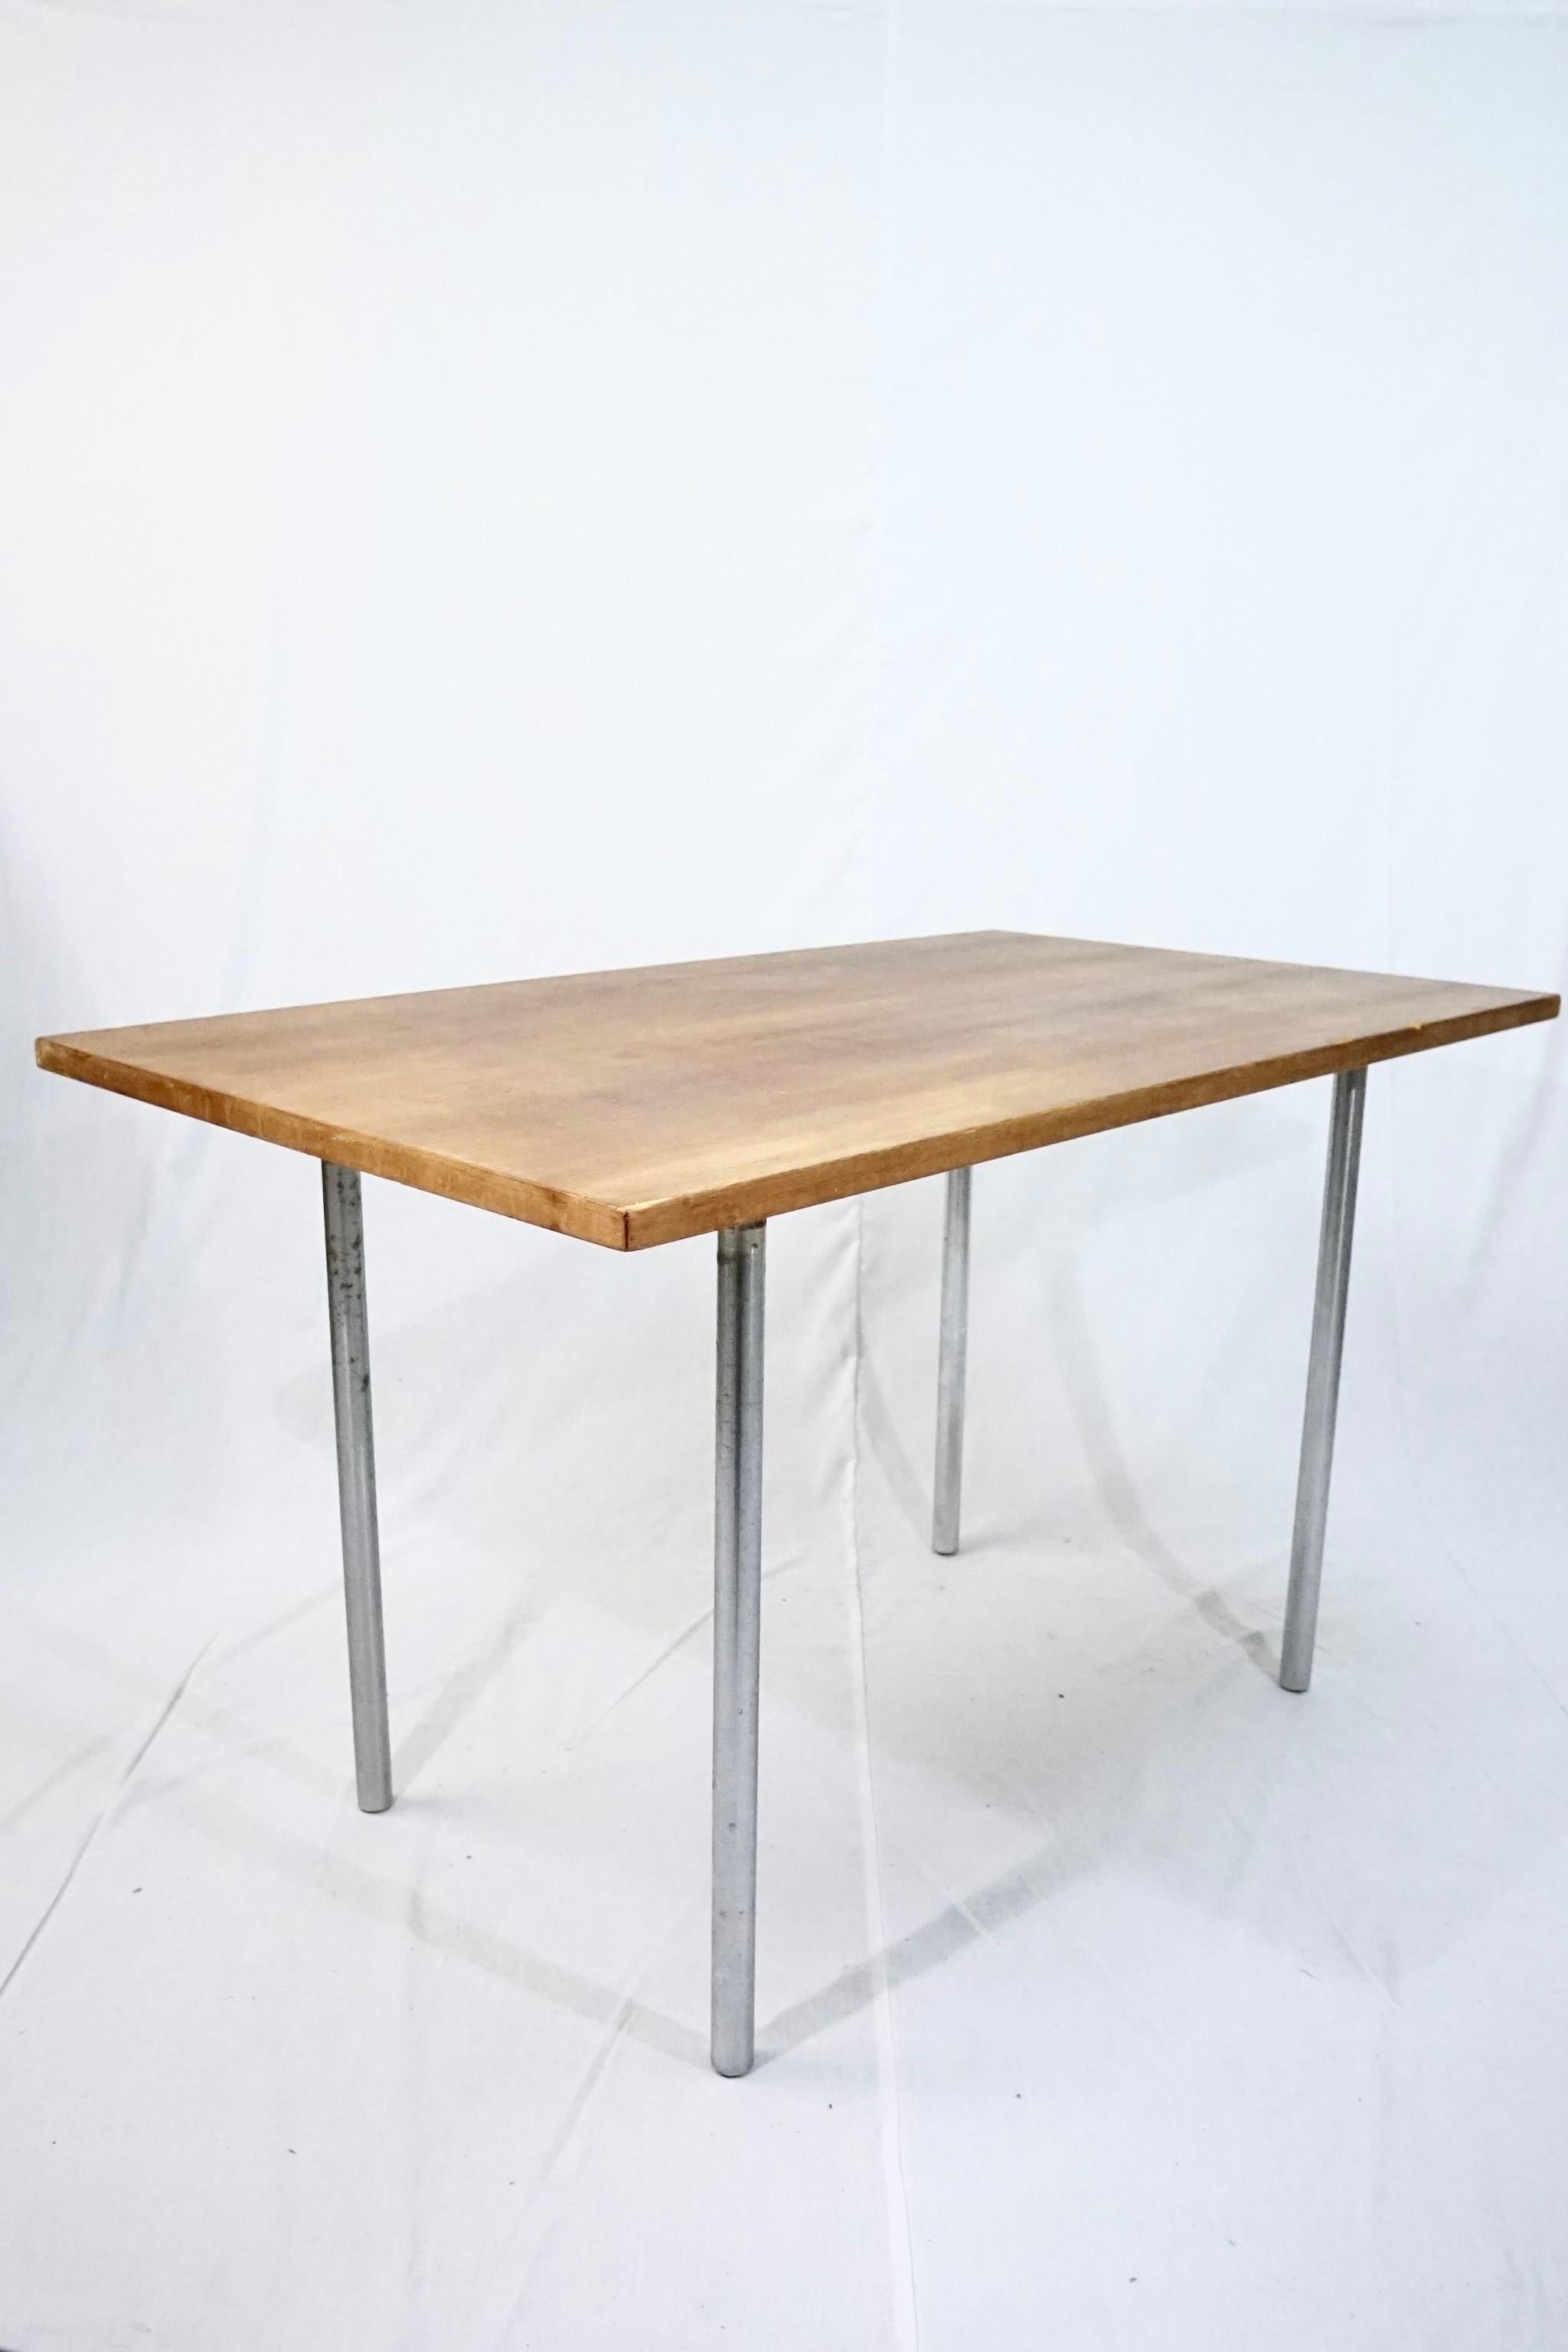 Danish Poul Kjærholm Pk41 Dining Table in Oregon Pine Manufactured by E Kold